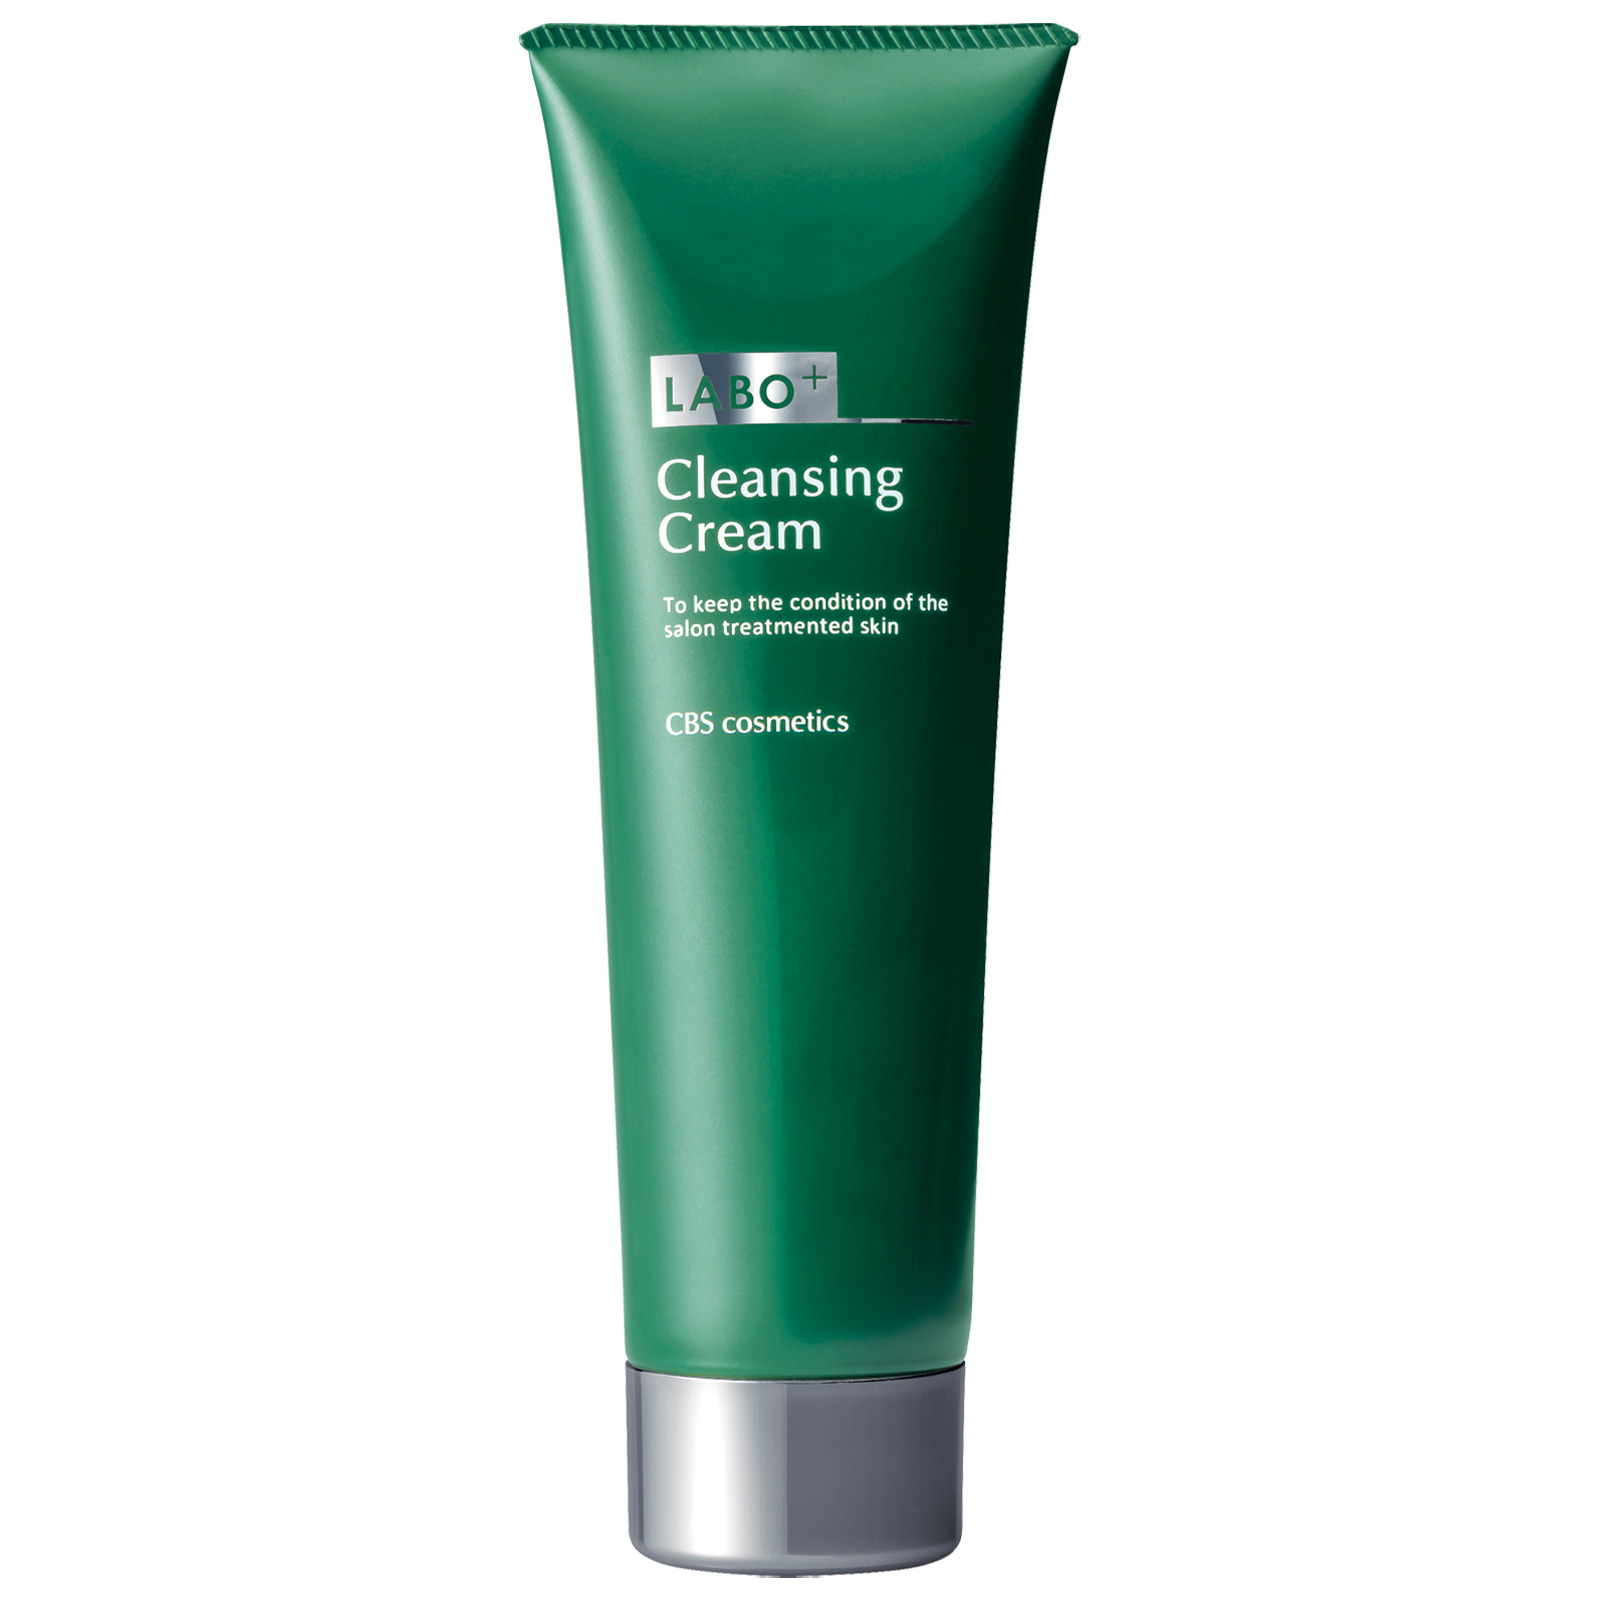 CBS Cosmetics LABO+ Cleansing Cream. Очищающий крем для лица Лабо+, 180 г